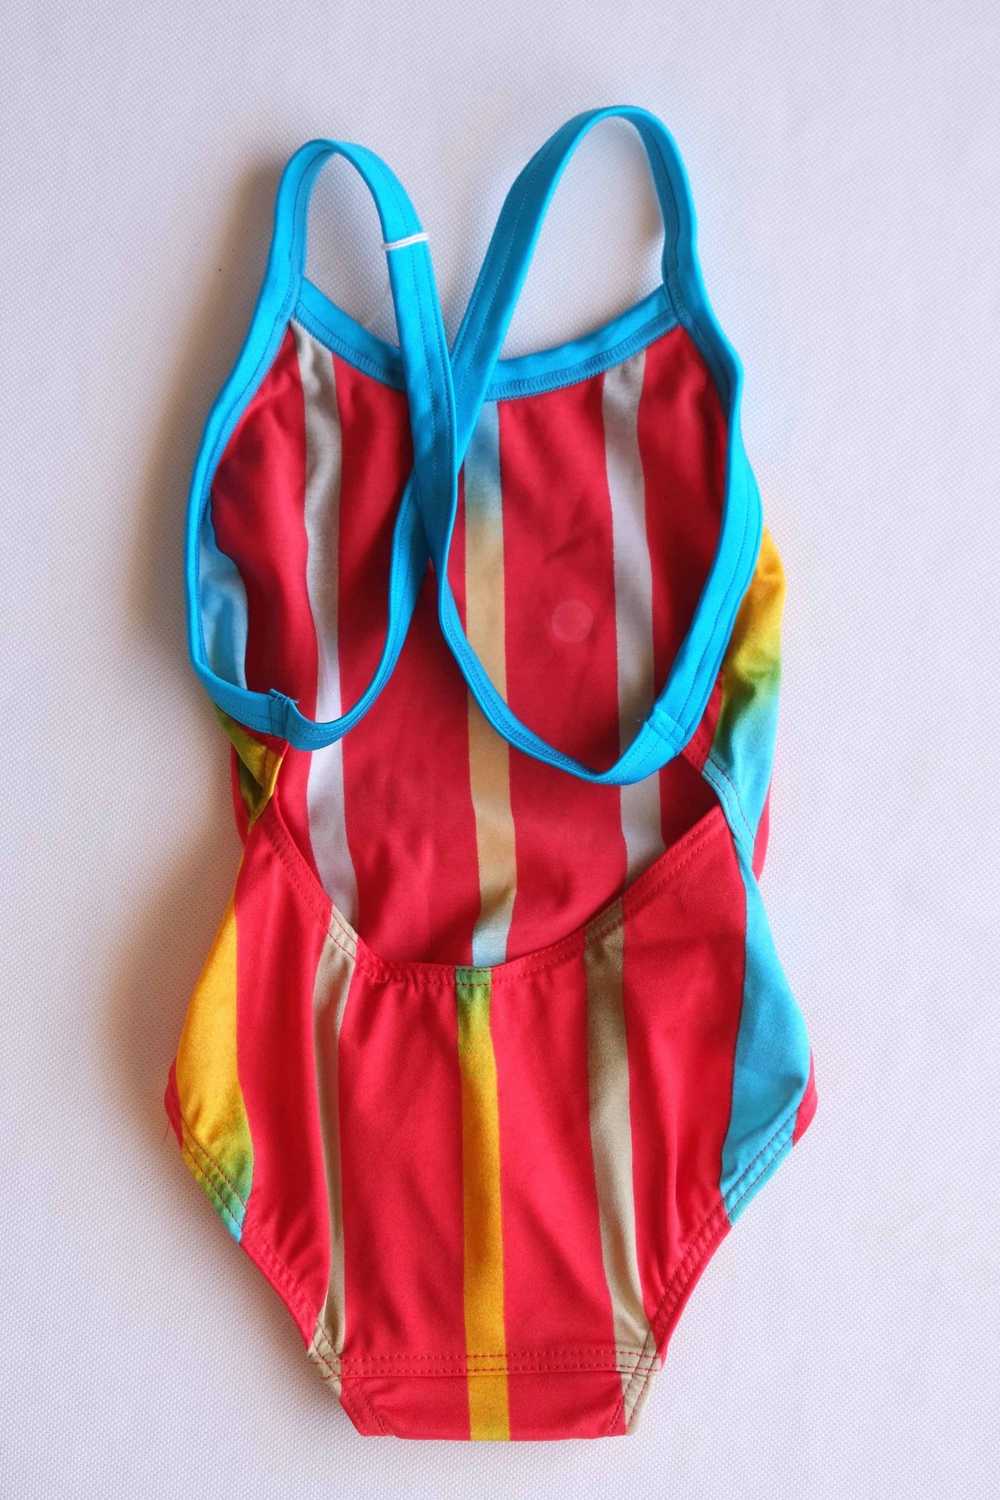 SOLAR 80's Girls Swimsuit - image 2